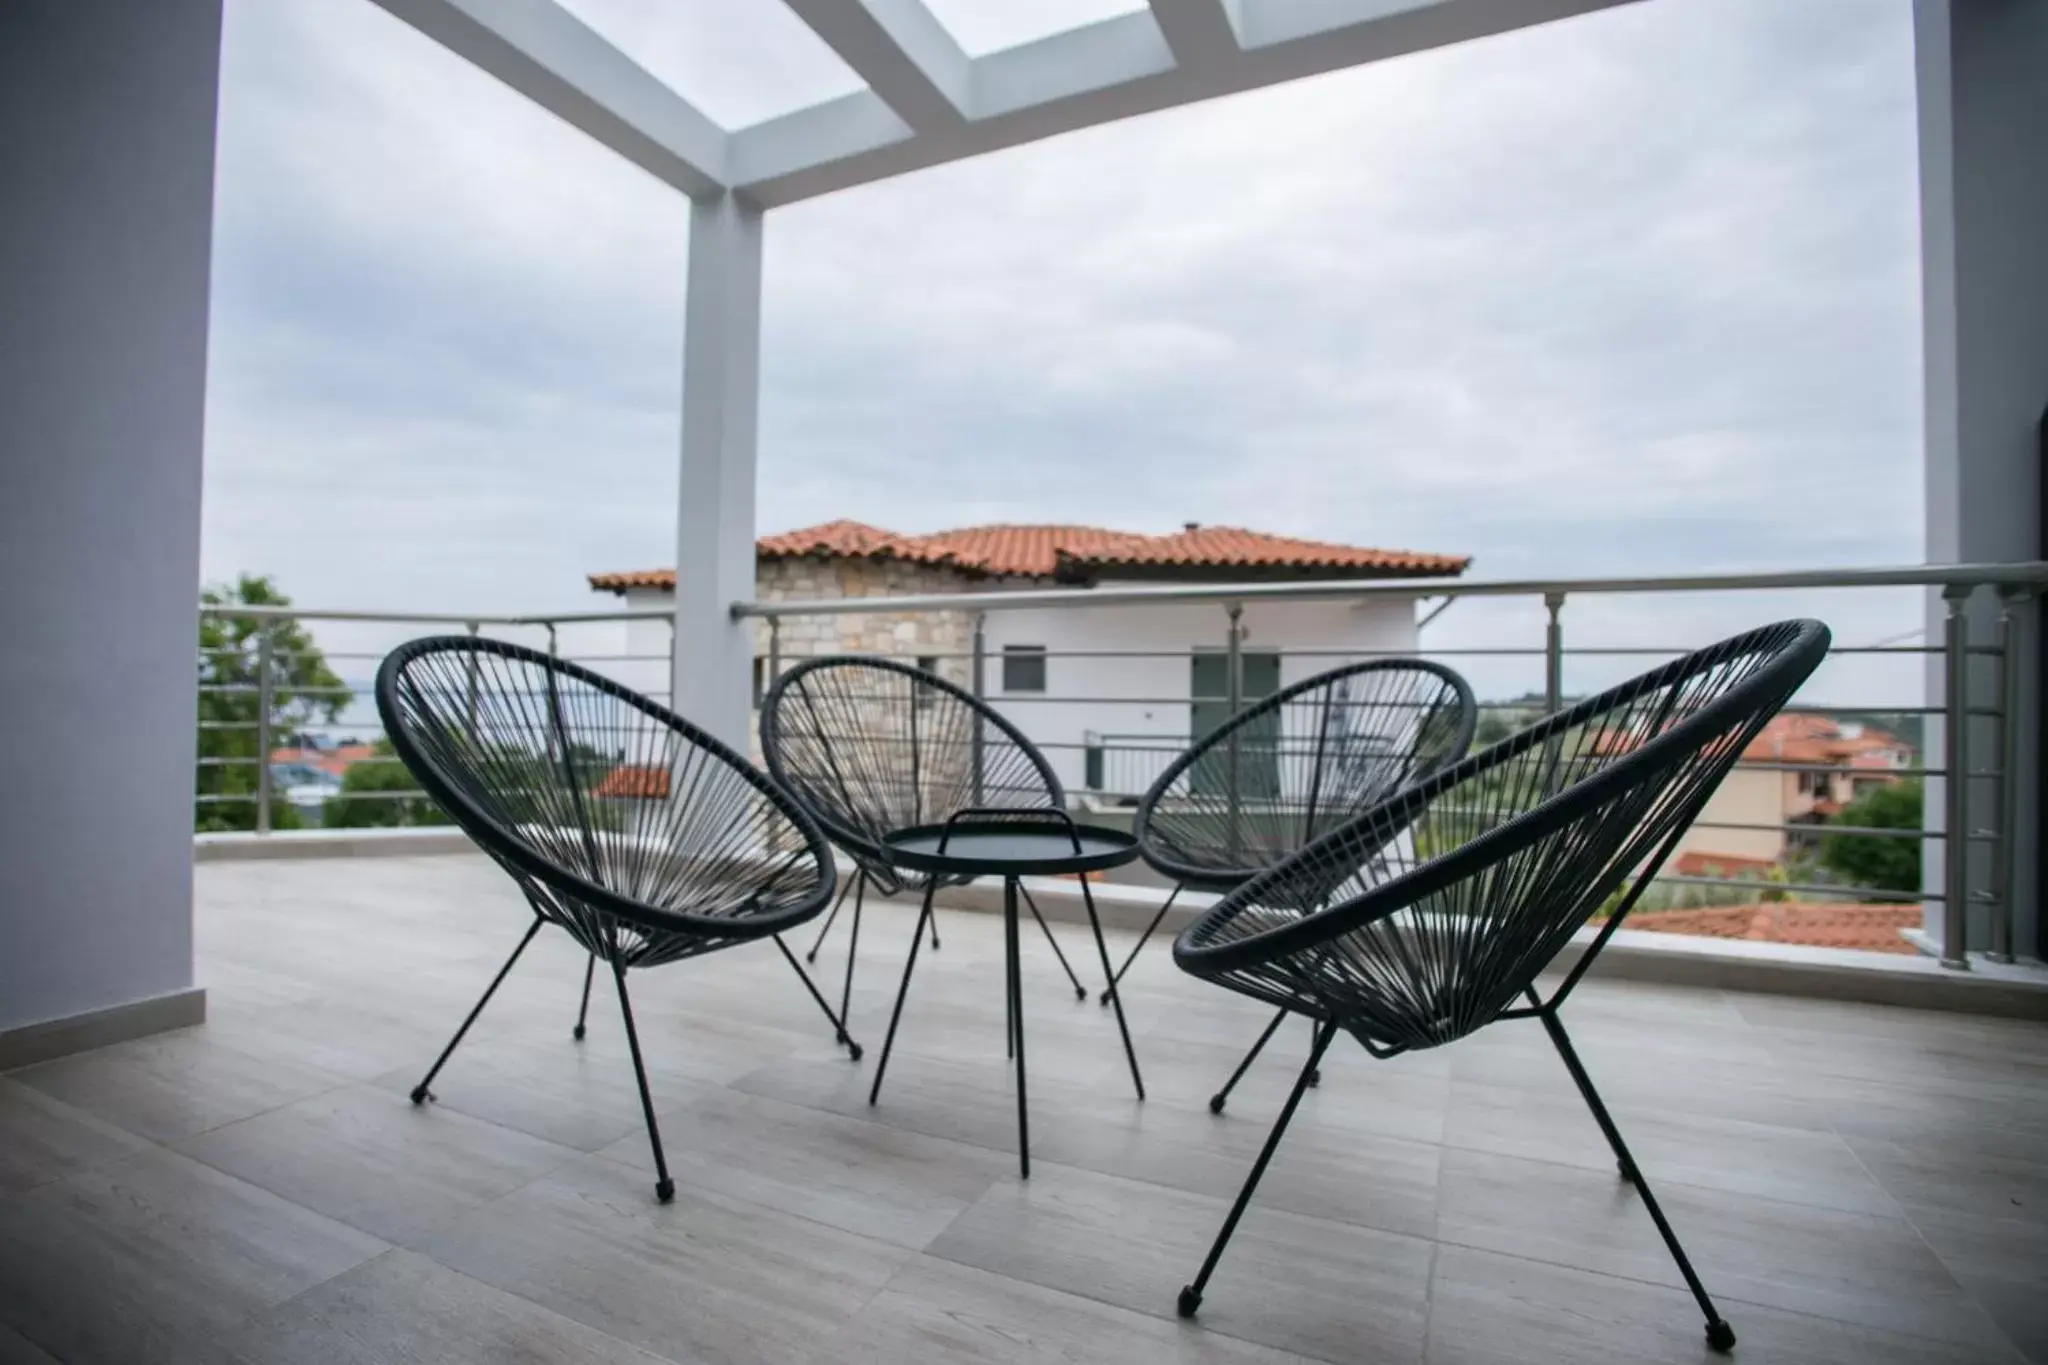 Balcony/Terrace in Anemos Luxury Apartments